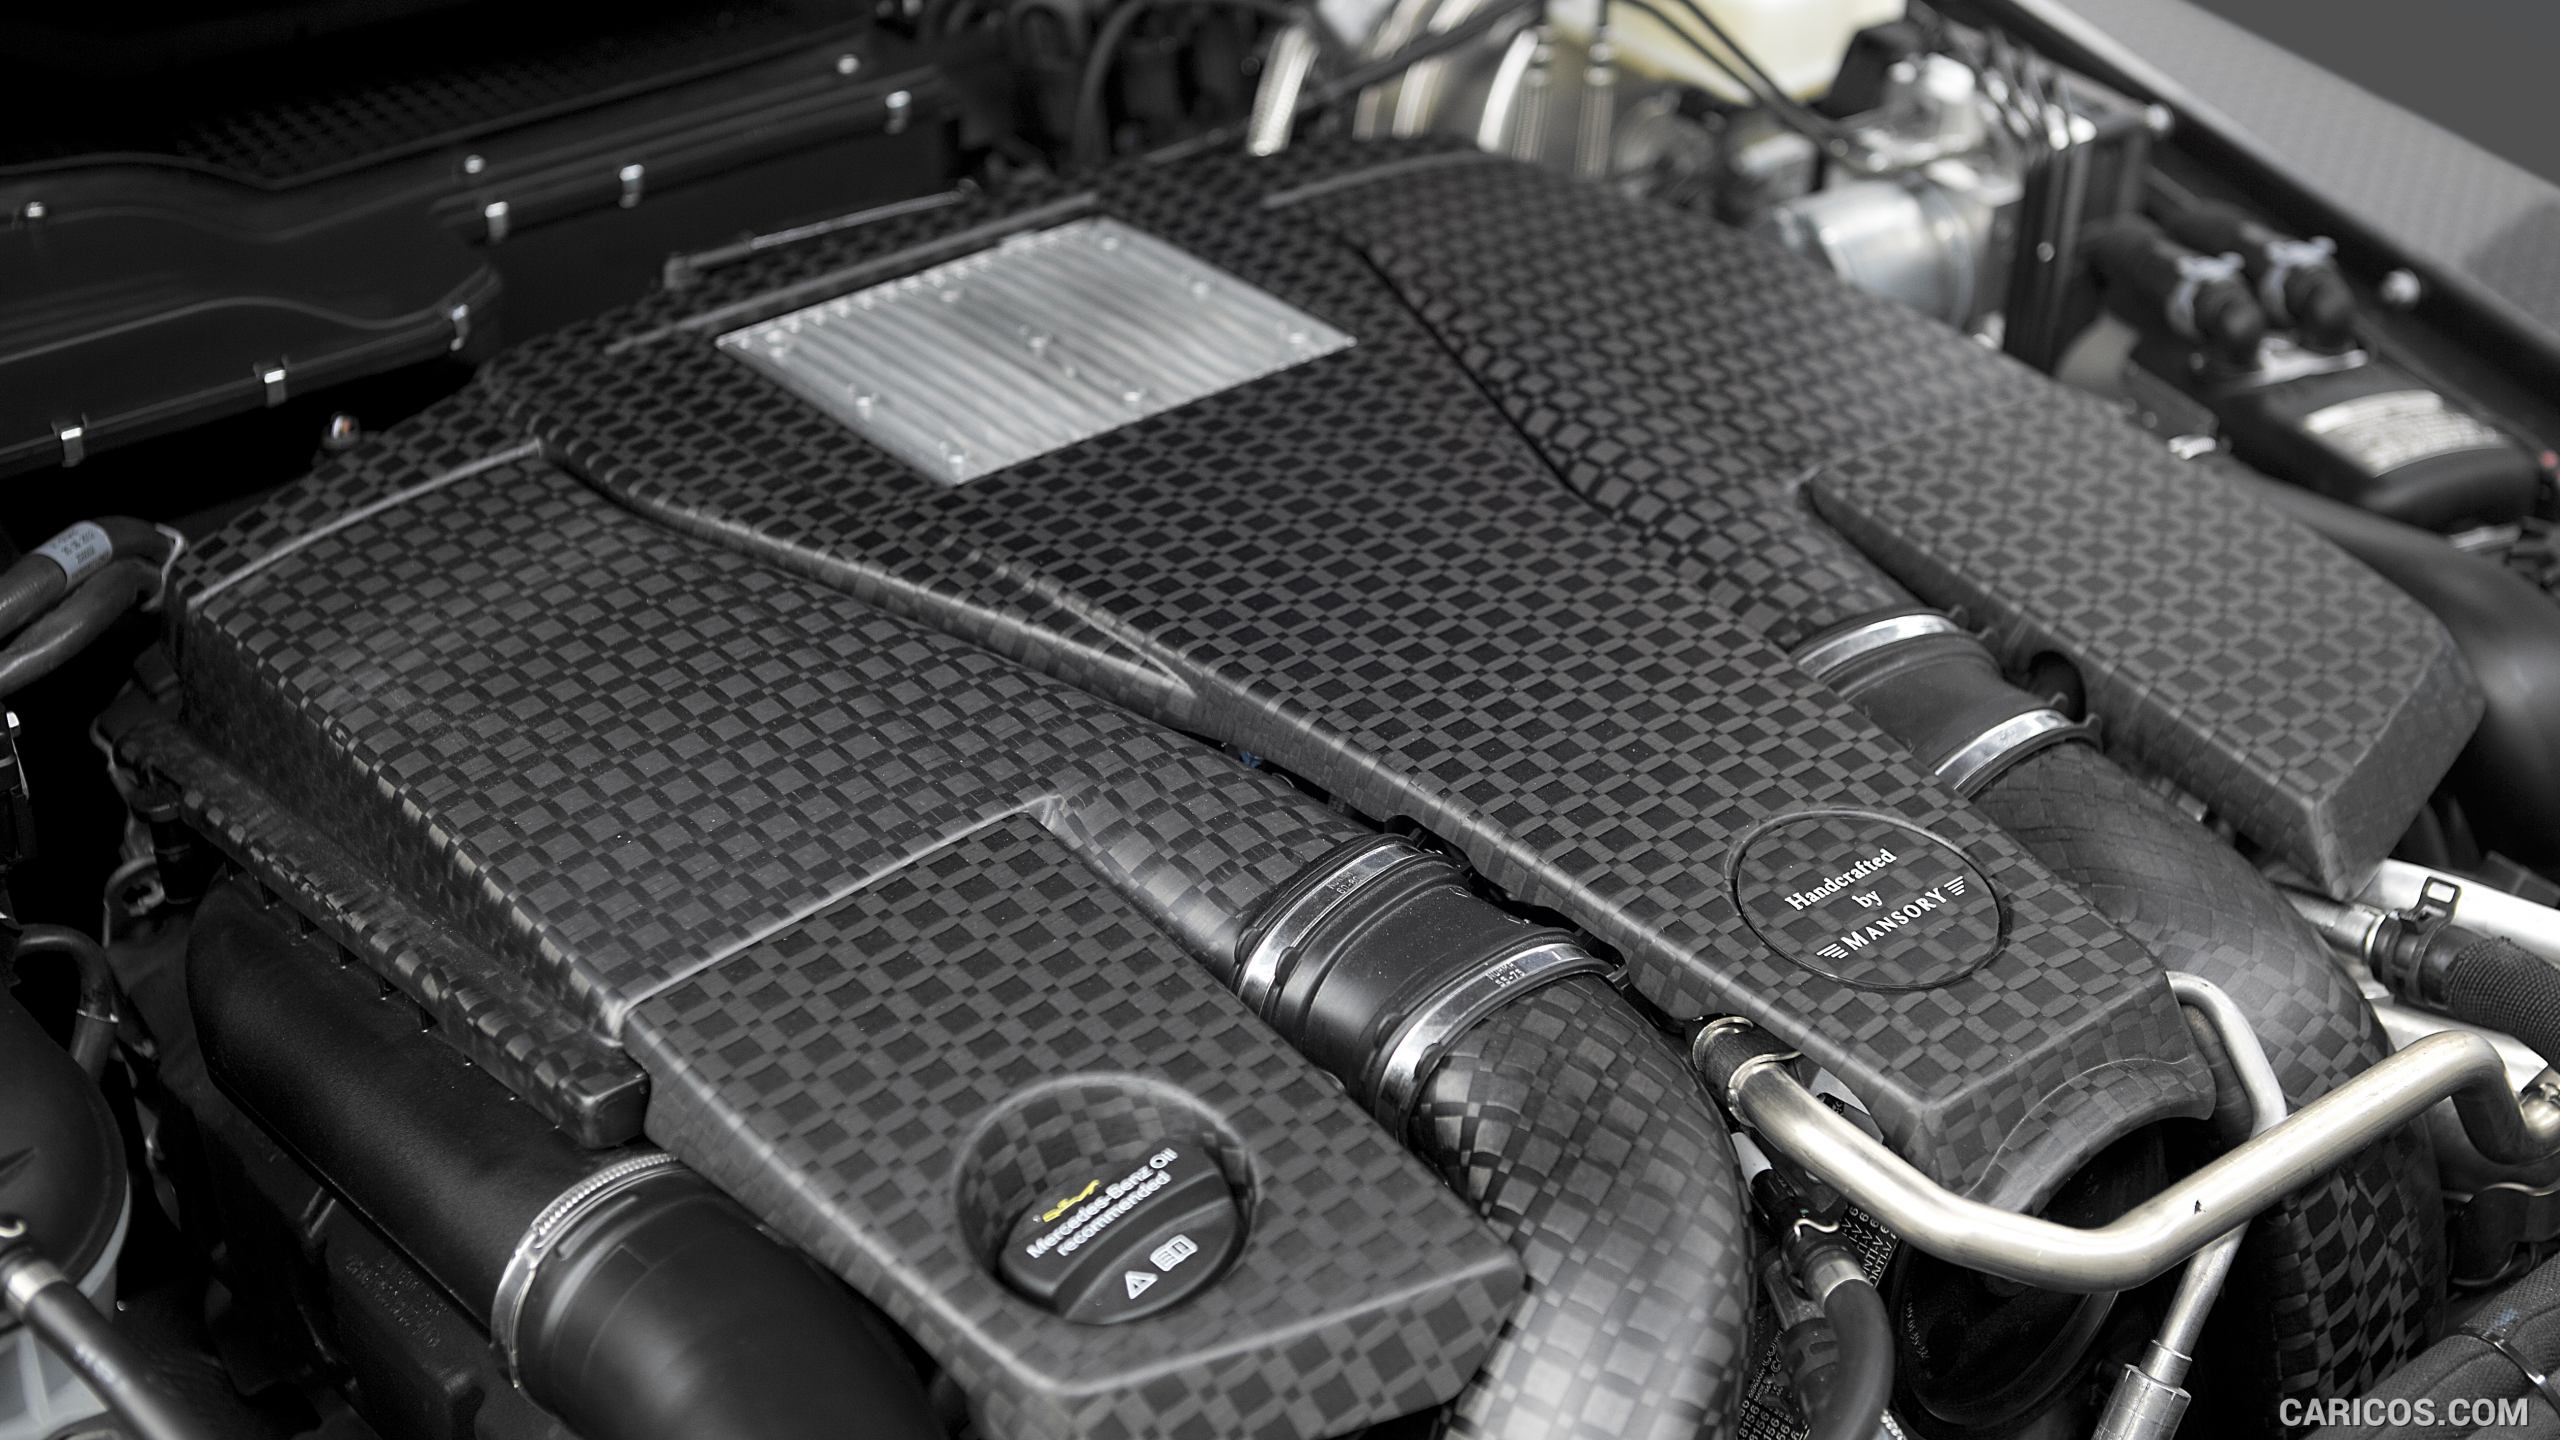 2016 MANSORY GRONOS Black Edition based on Mercedes G63 AMG - Engine, #16 of 16